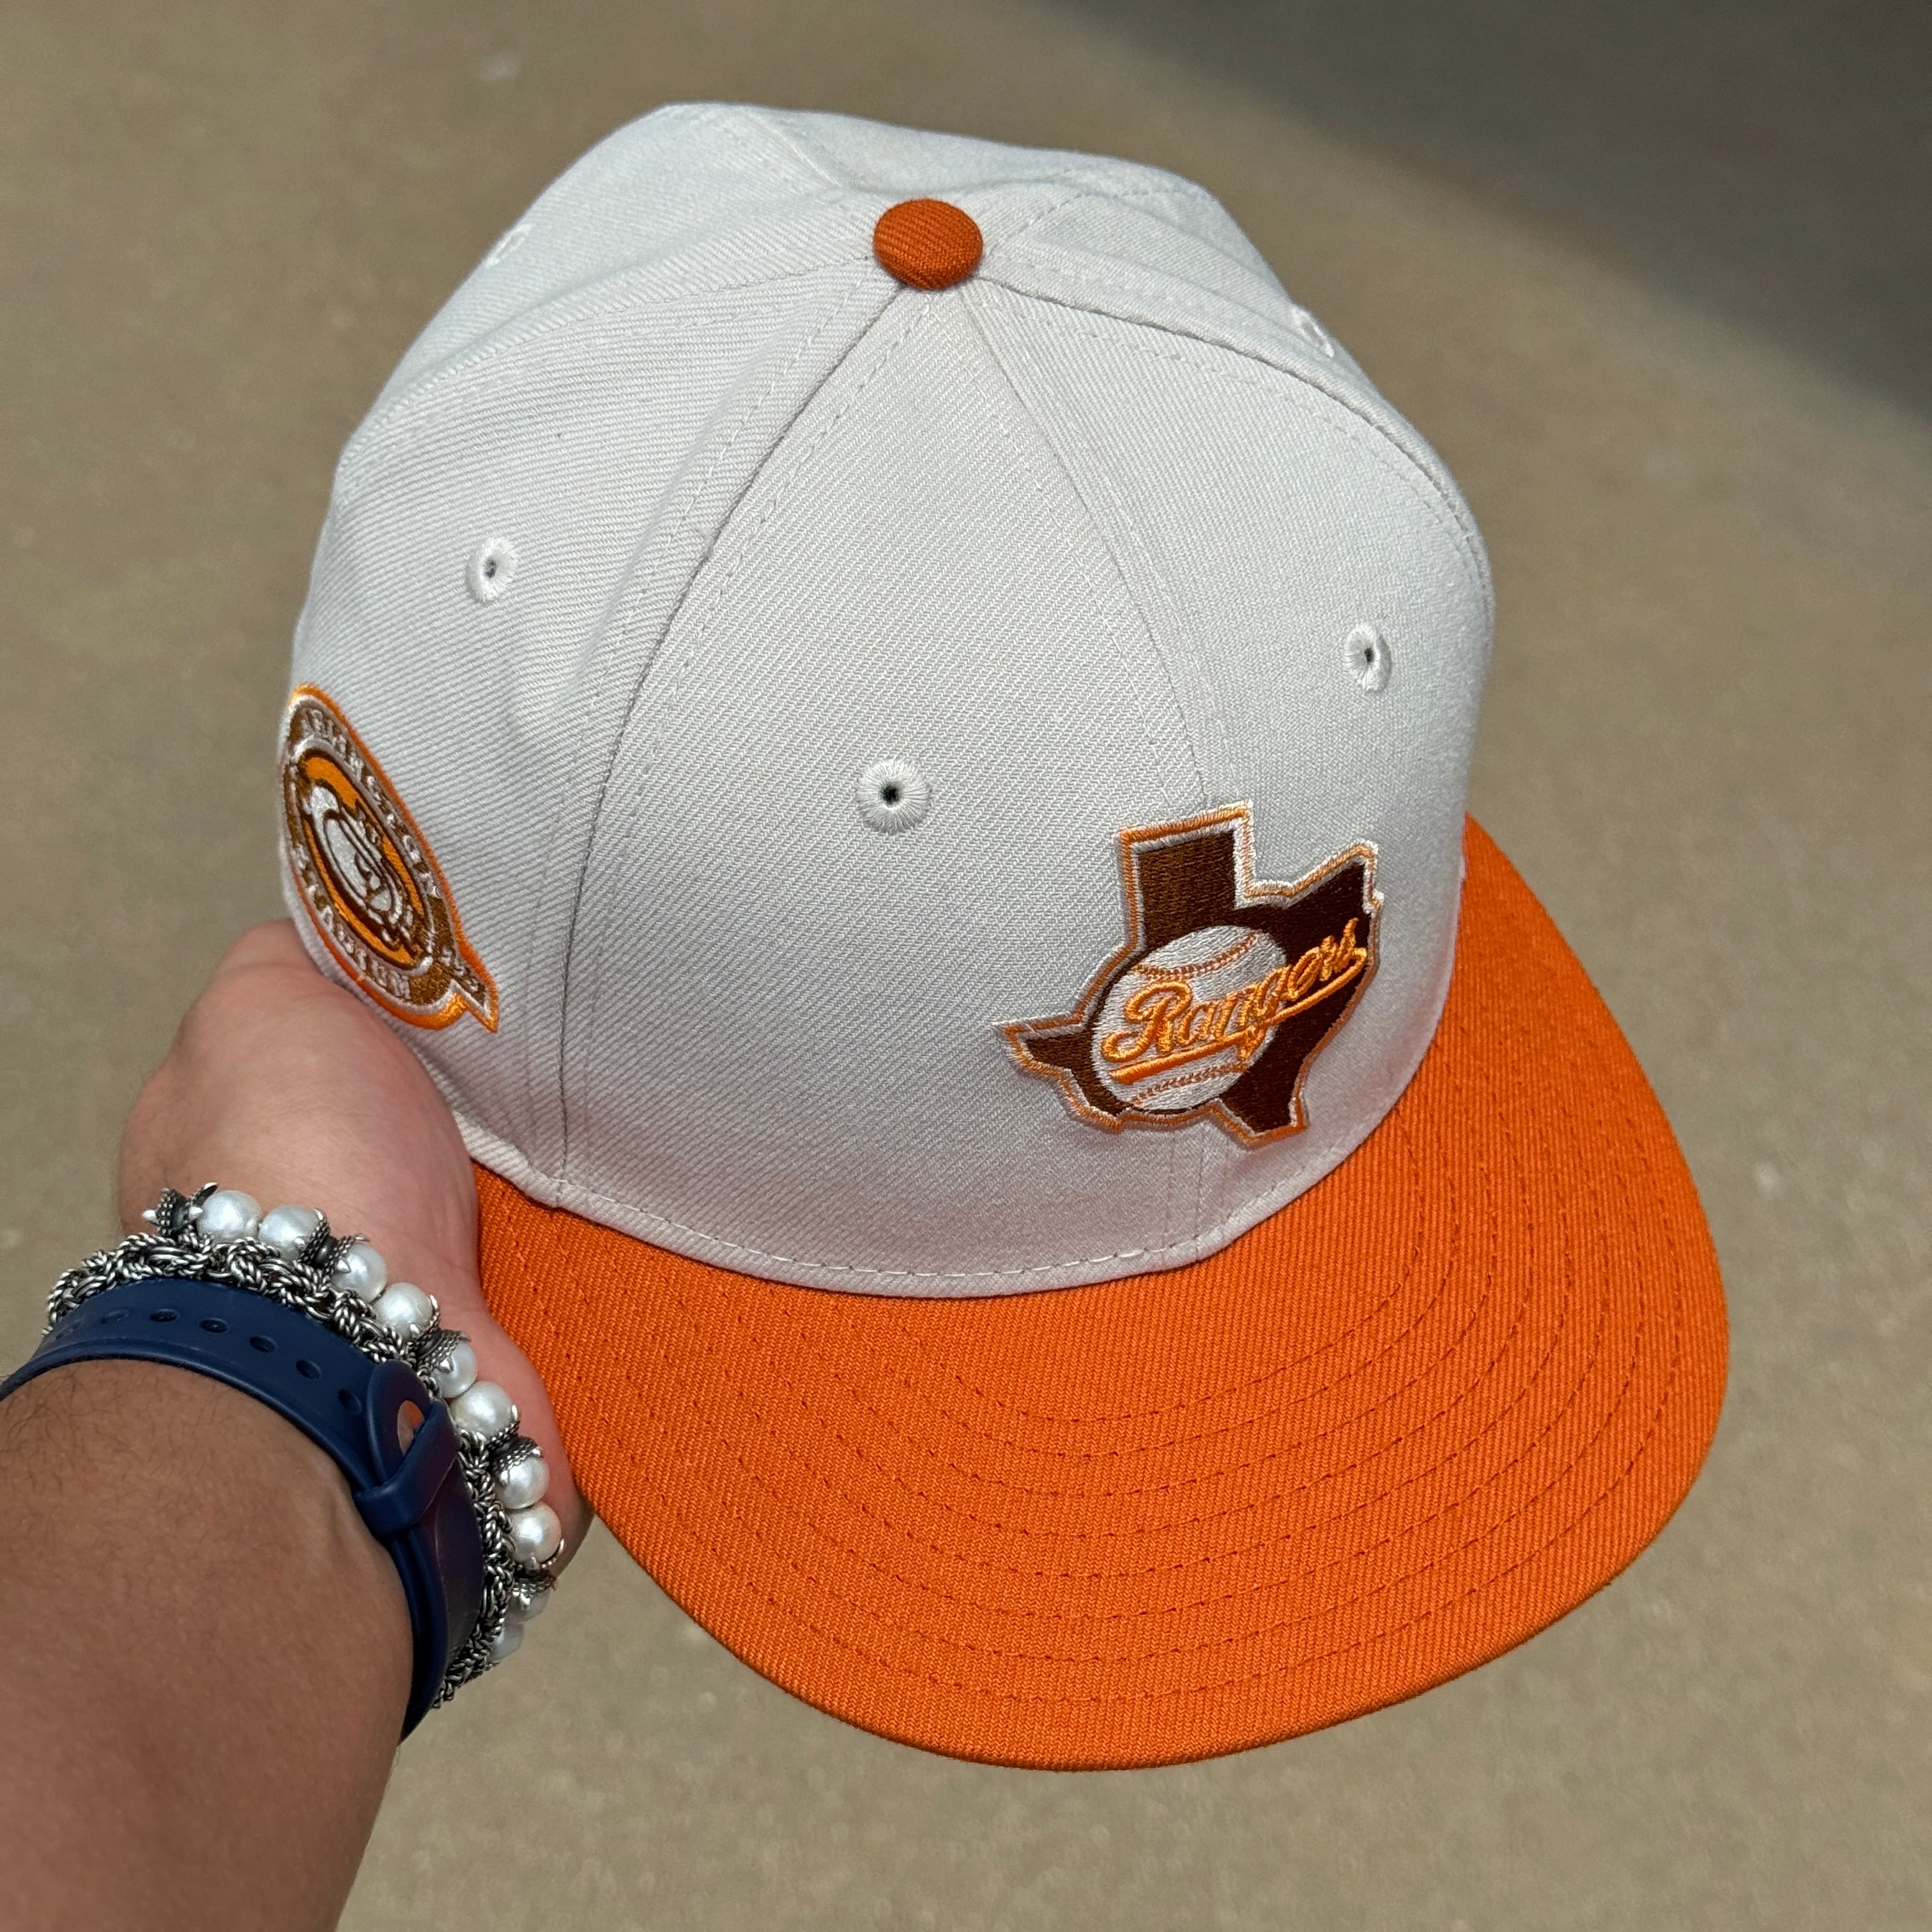 USED 1/8 Chrome Dallas Texas Rangers Arlington Stadium 59fifty New Era Fitted Hat Cap